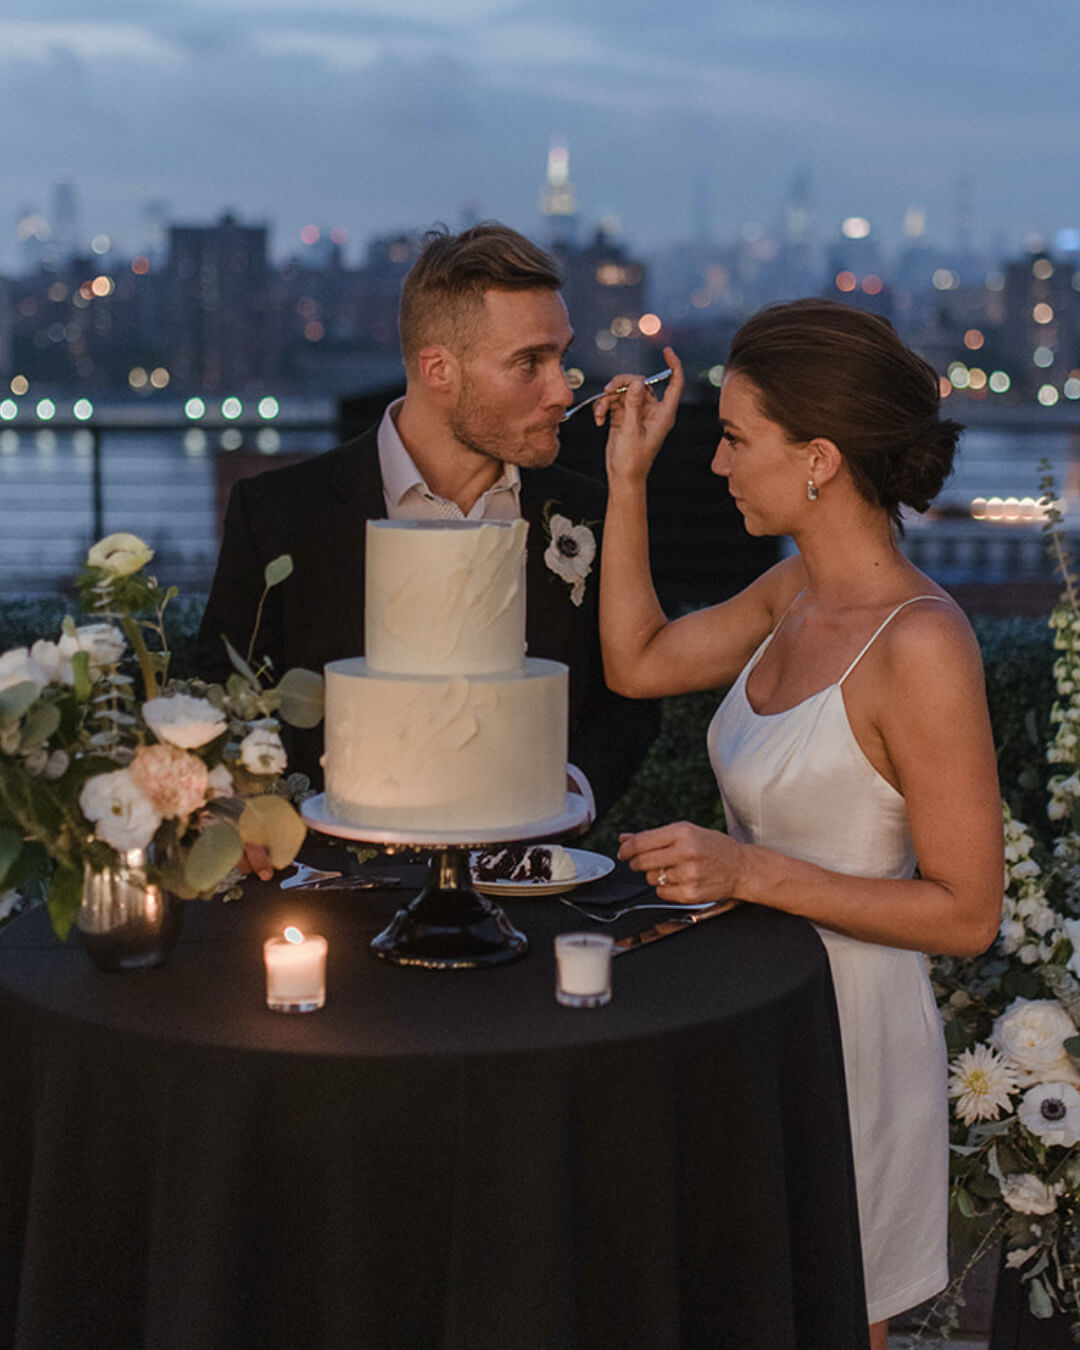 Connor Jones and Stephanie Fasano wedding cake.